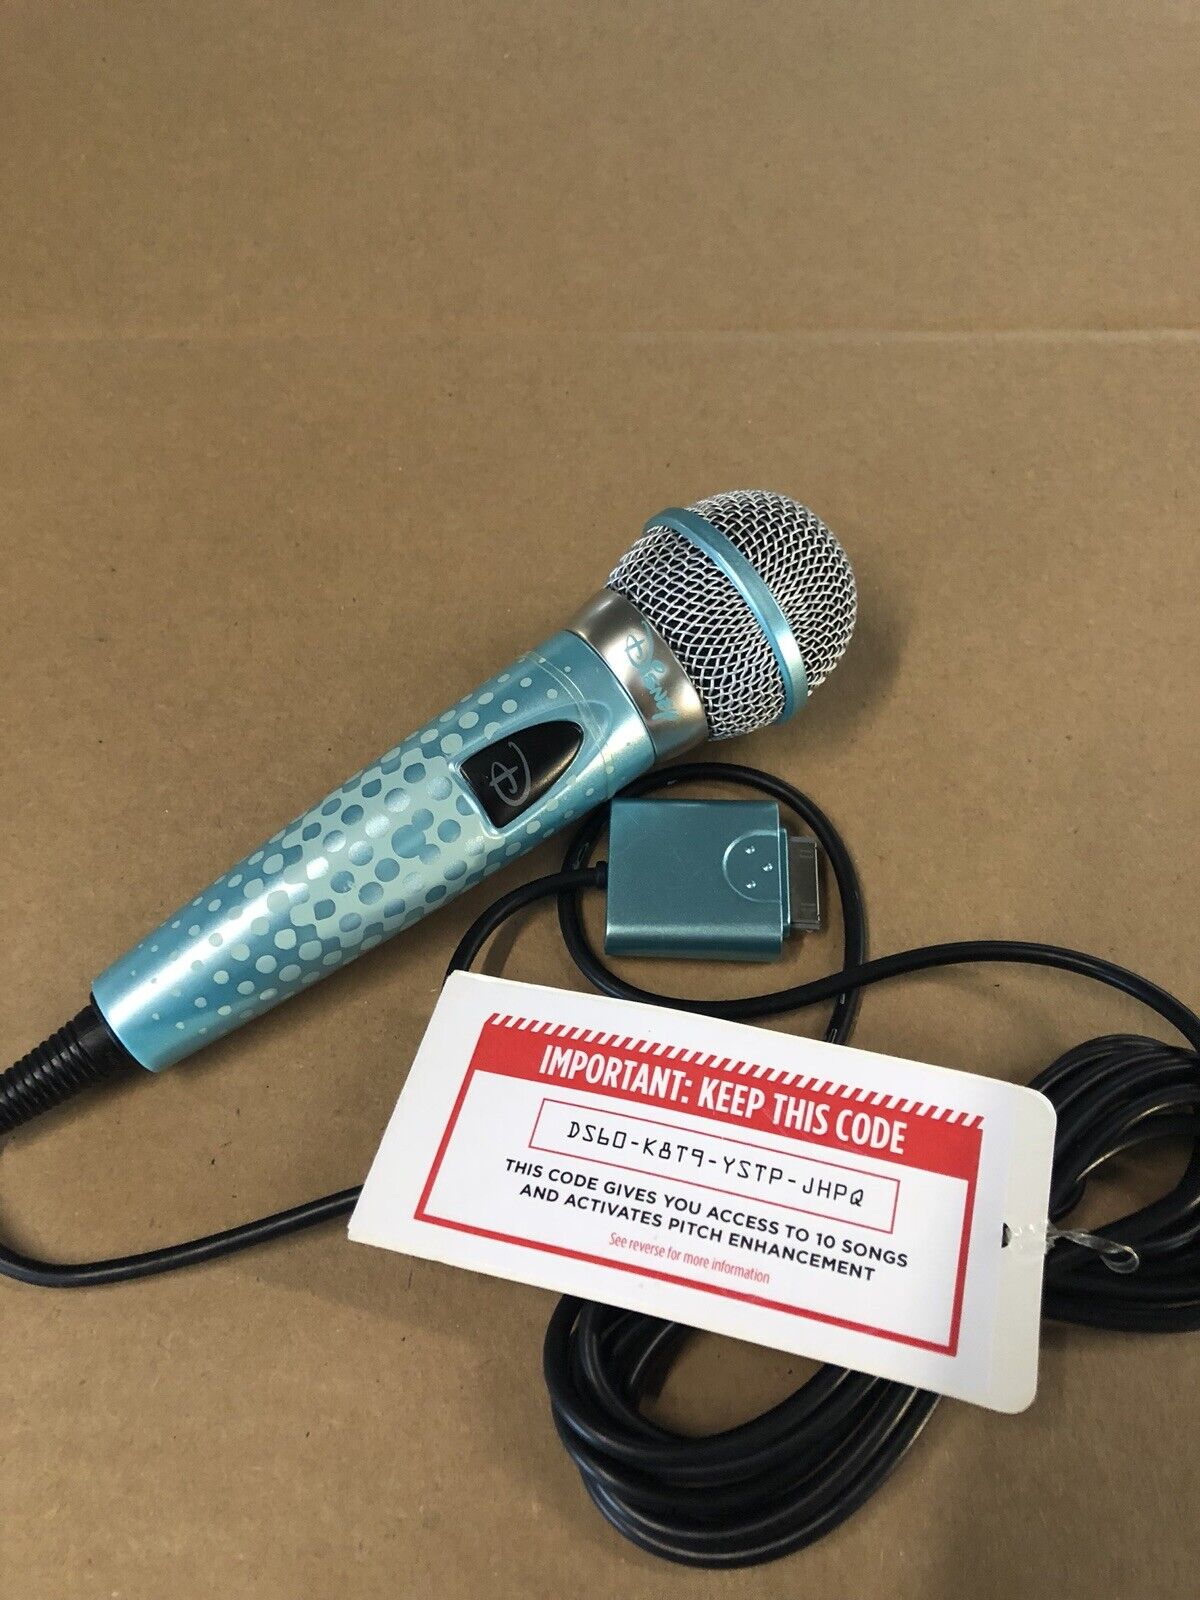 Disney ds60 karaoke mic for ipad ipod iphone mic FIRST ACT VERY NICE